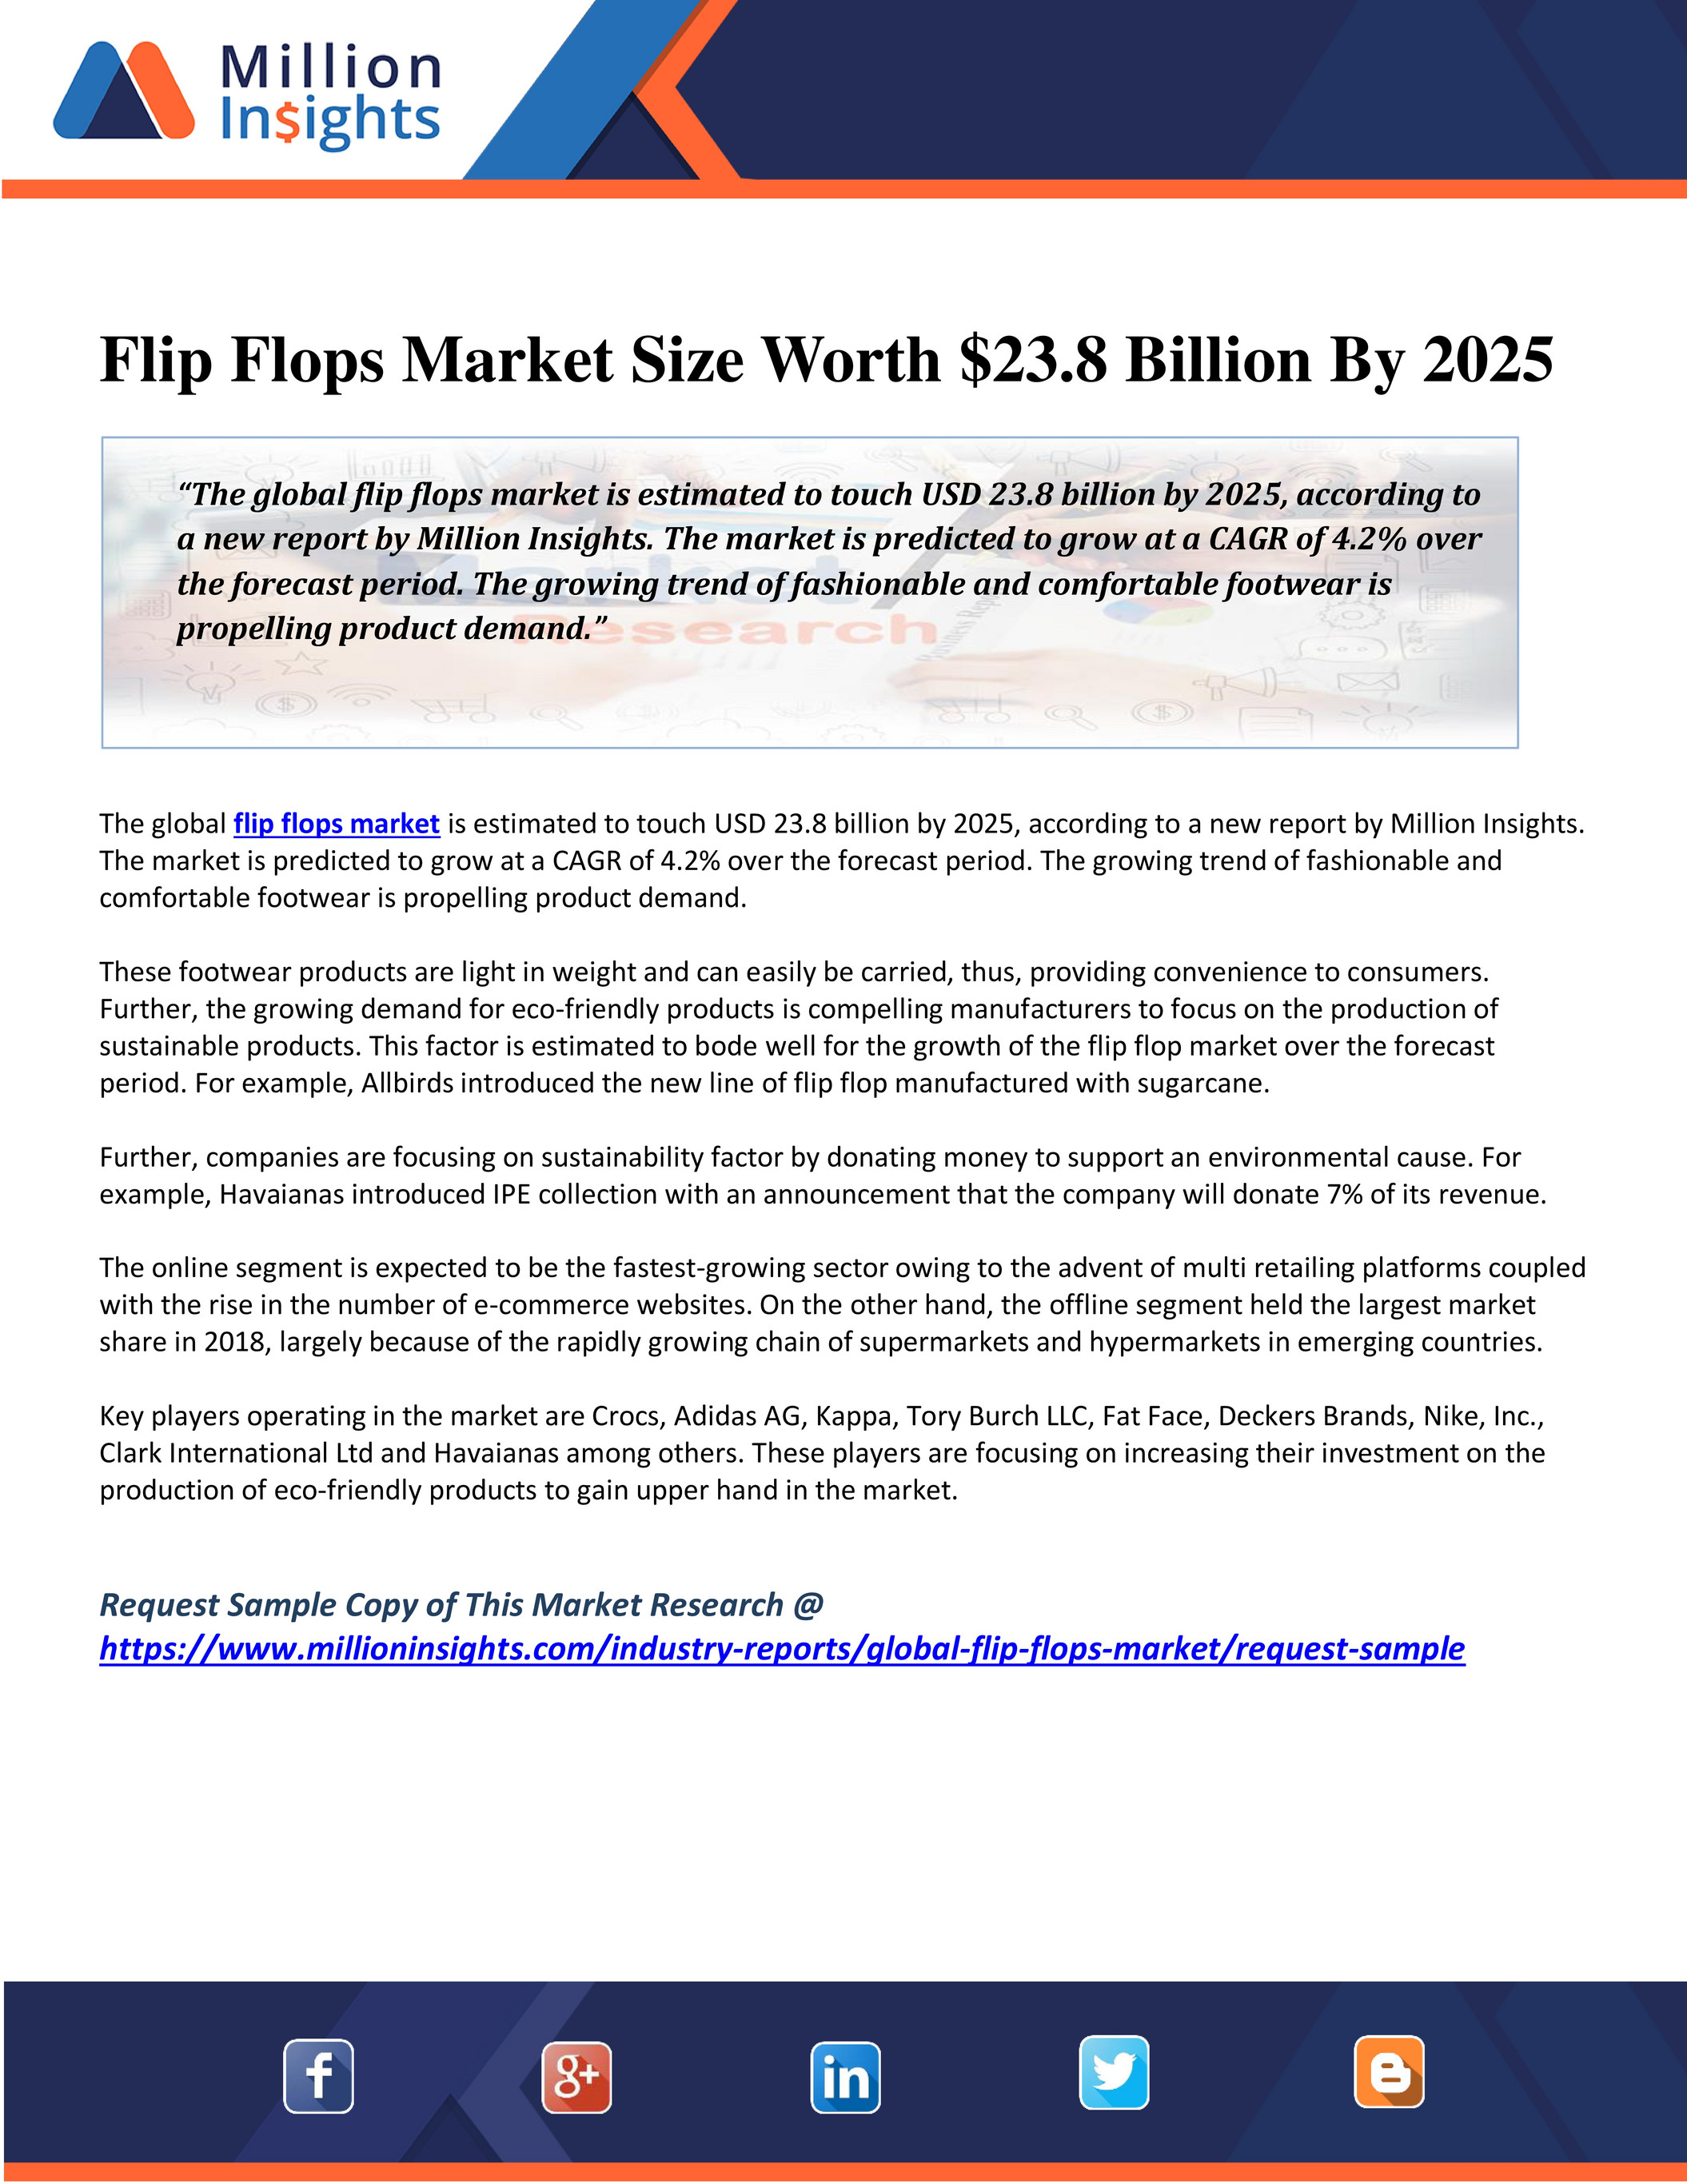 Million Insights - Flip Flops Market Size Worth $23.8 Billion By